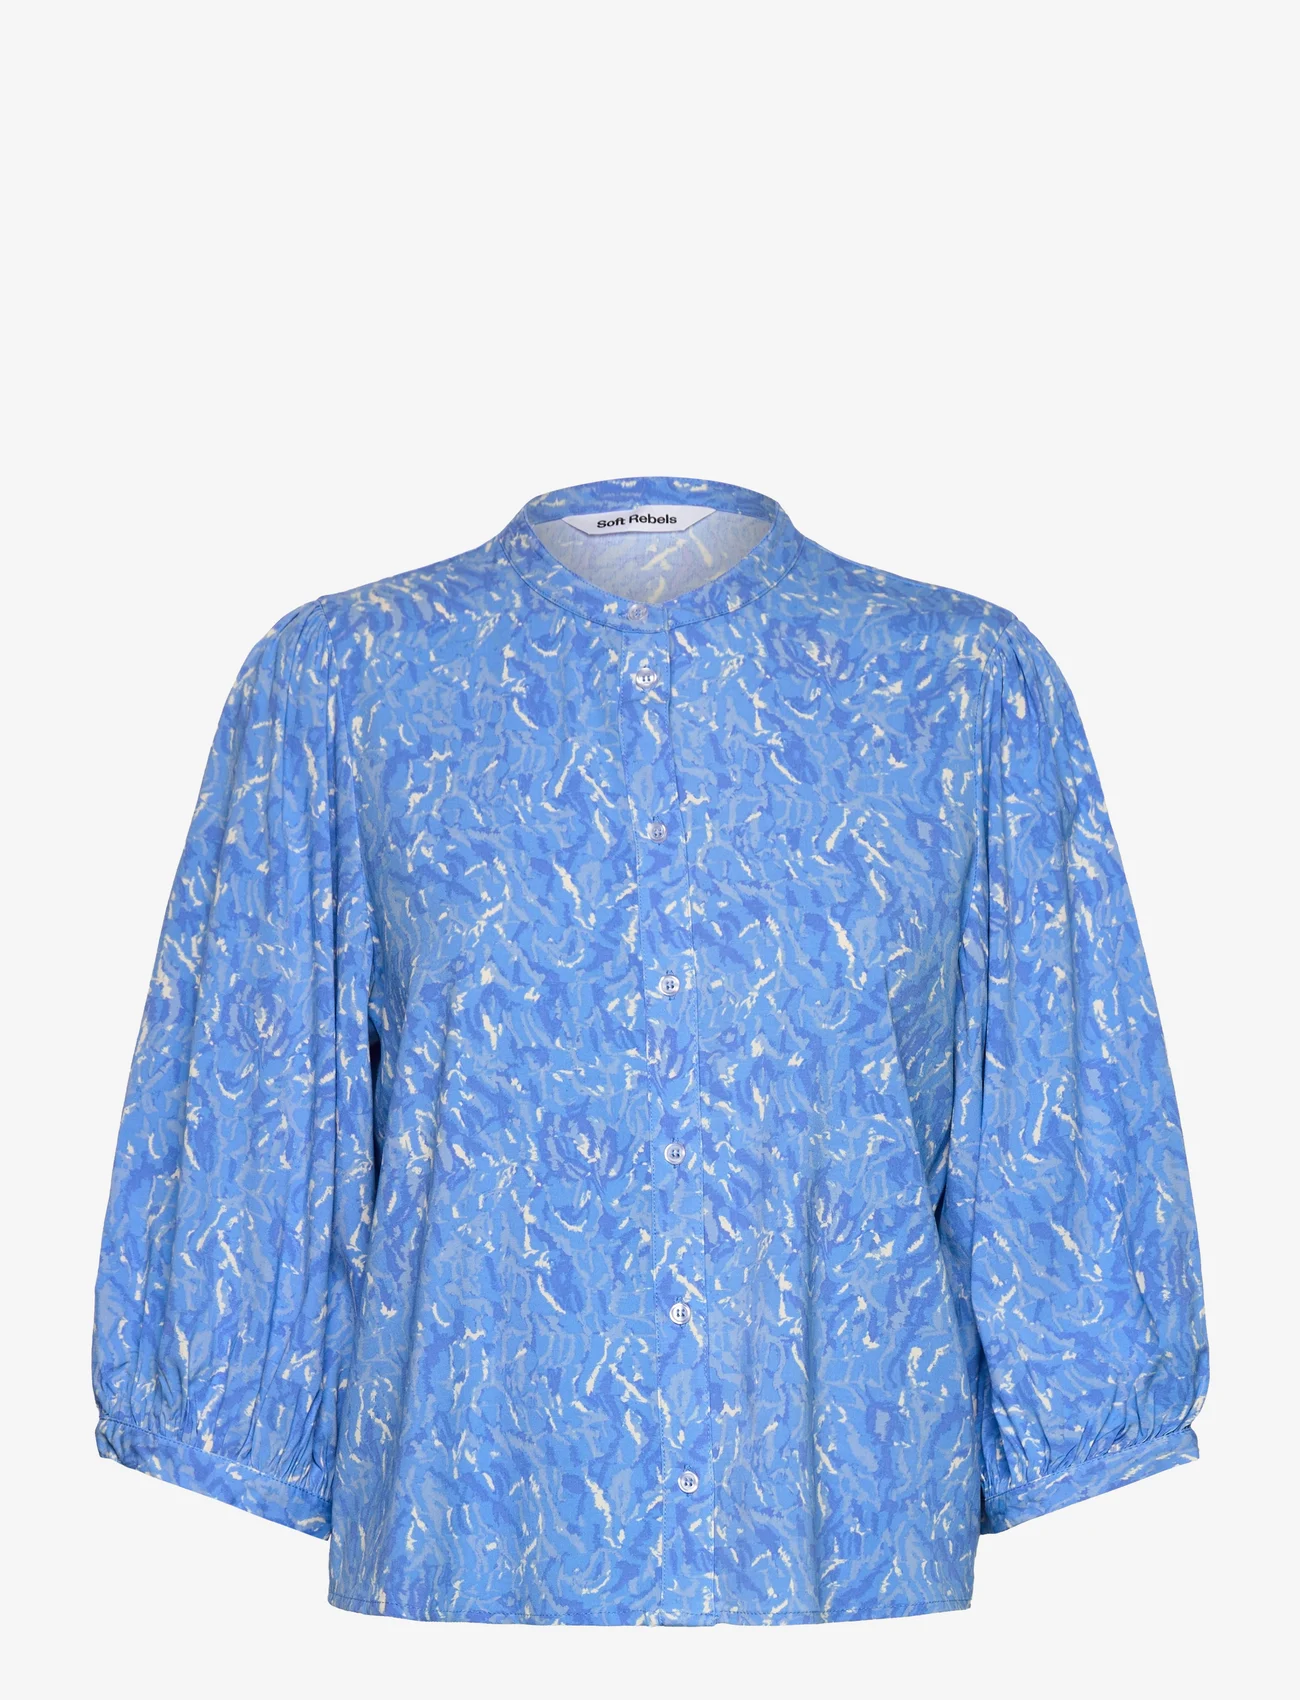 Soft Rebels - SRBriella Elma Shirt - pitkähihaiset puserot - graphic animal azure blue print - 0